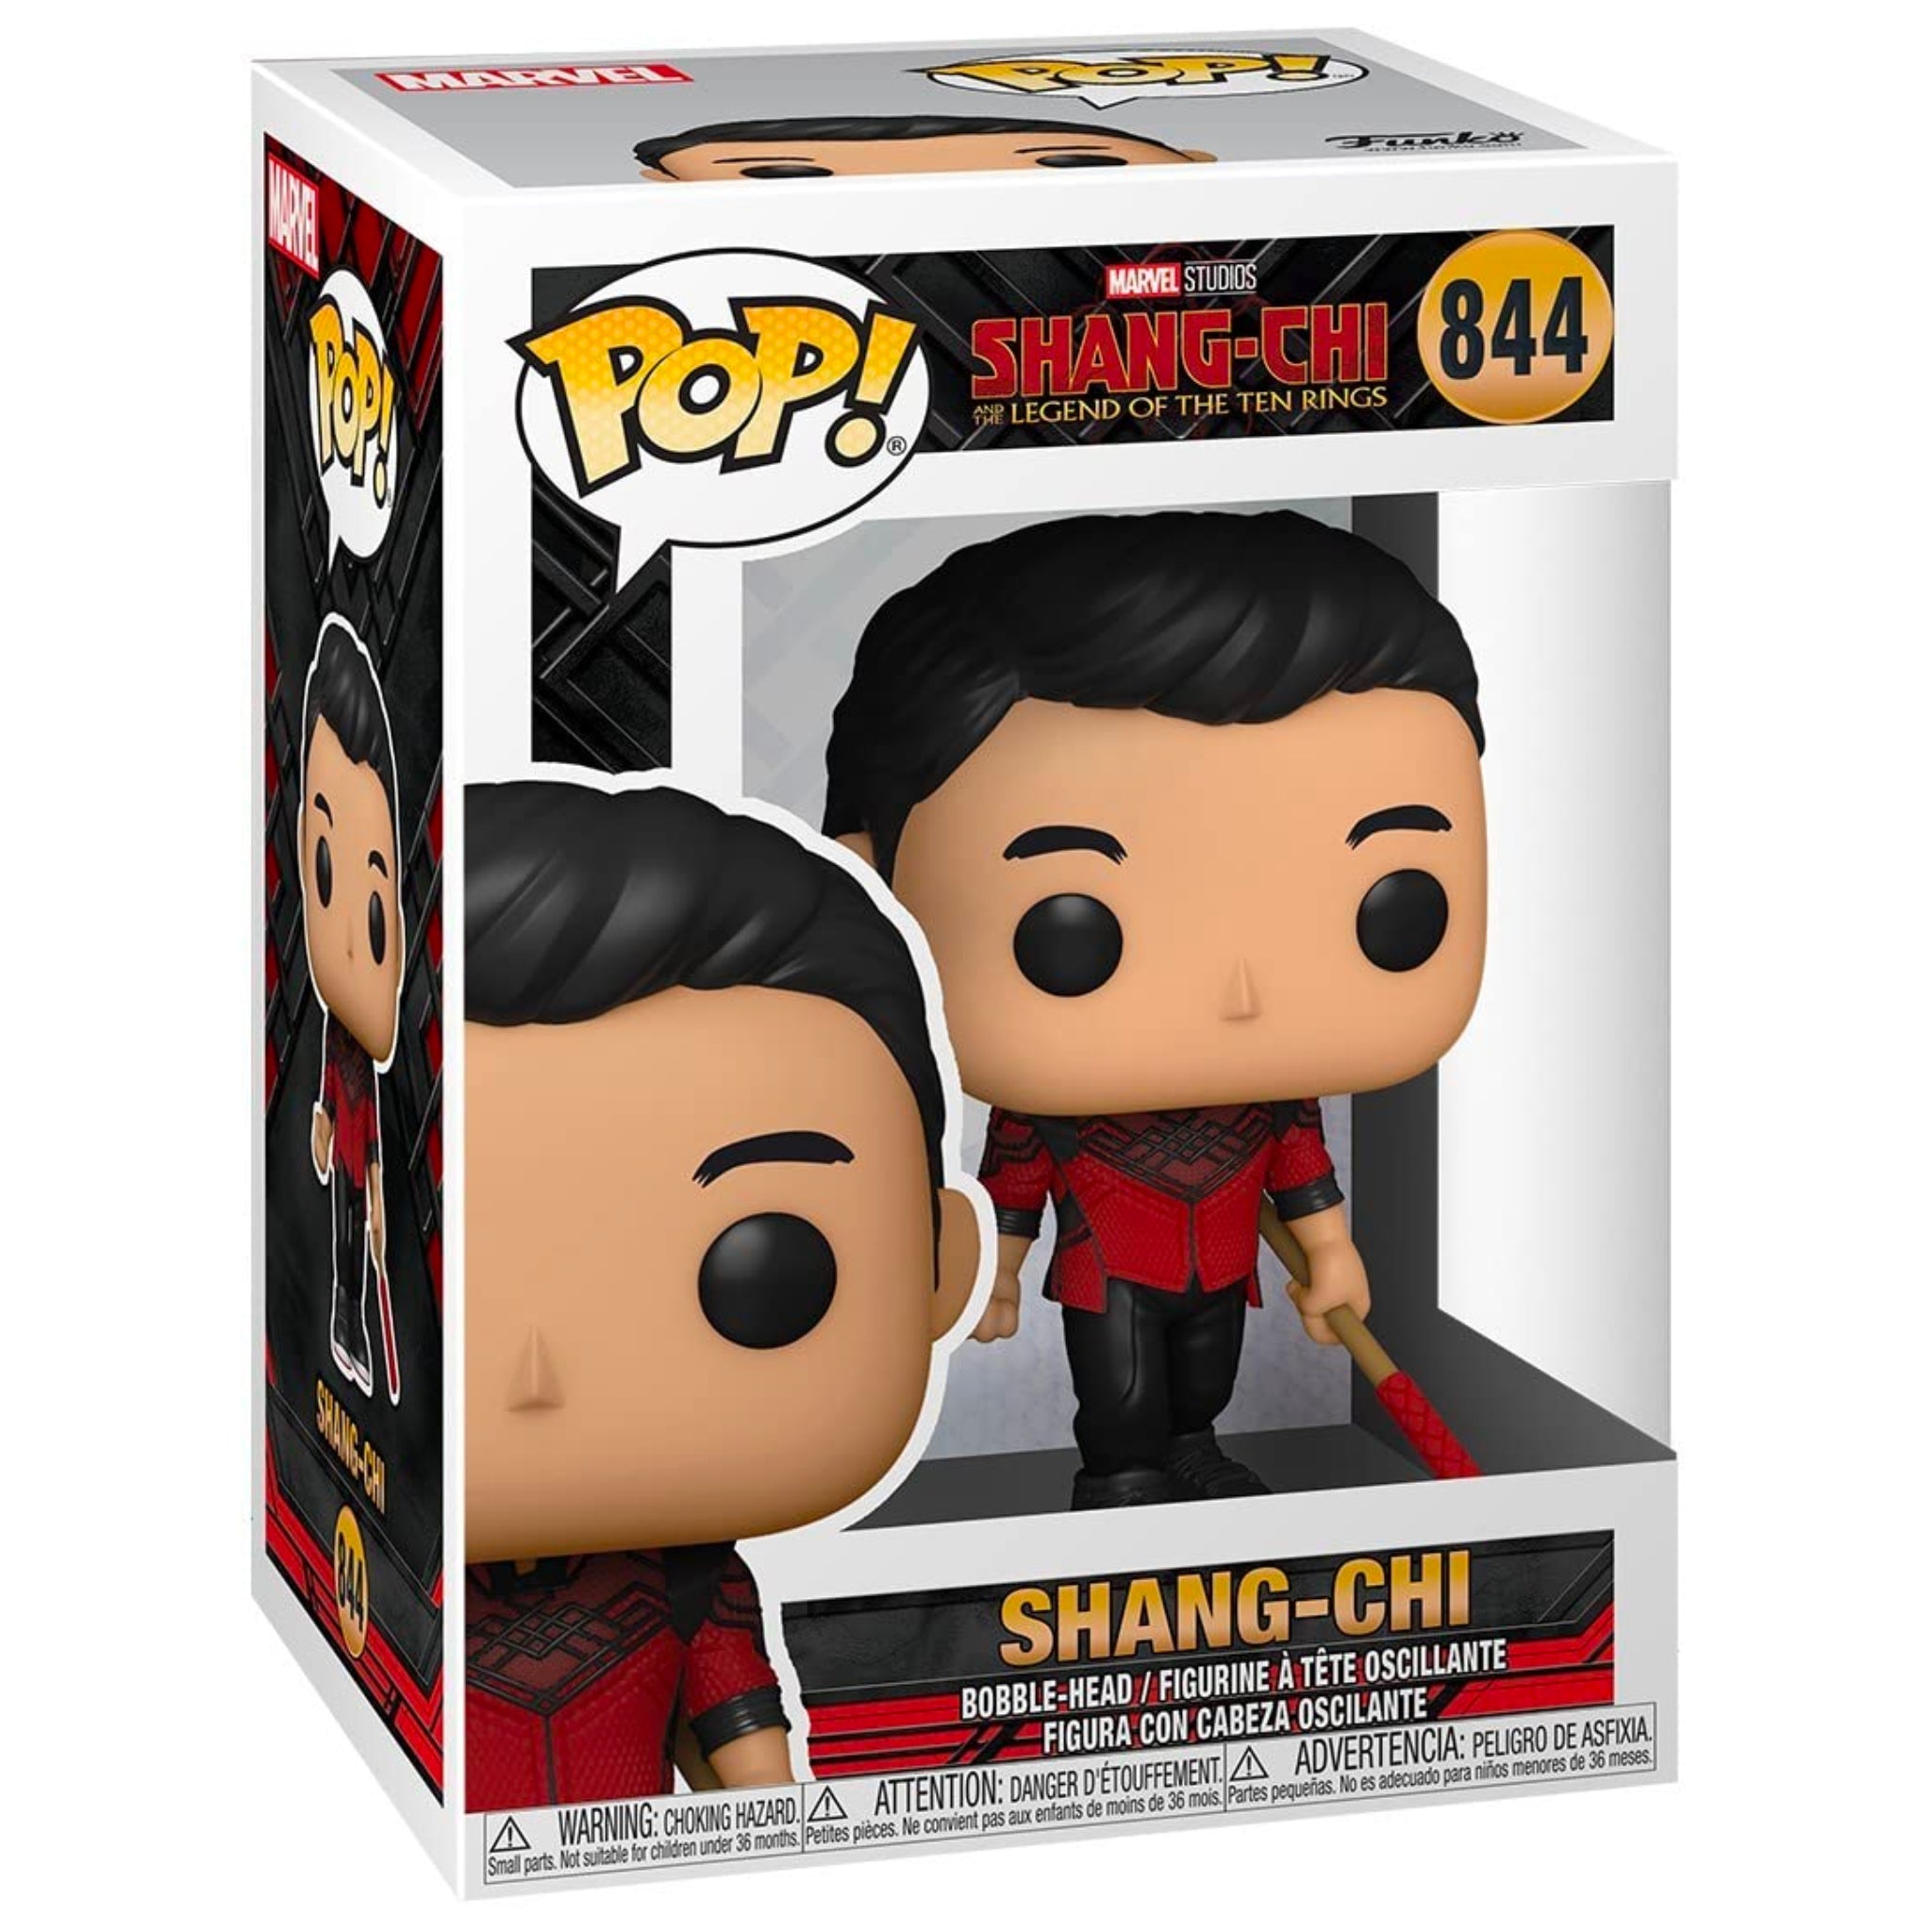 Shang-Chi (Bo Staff) Funko Pop!